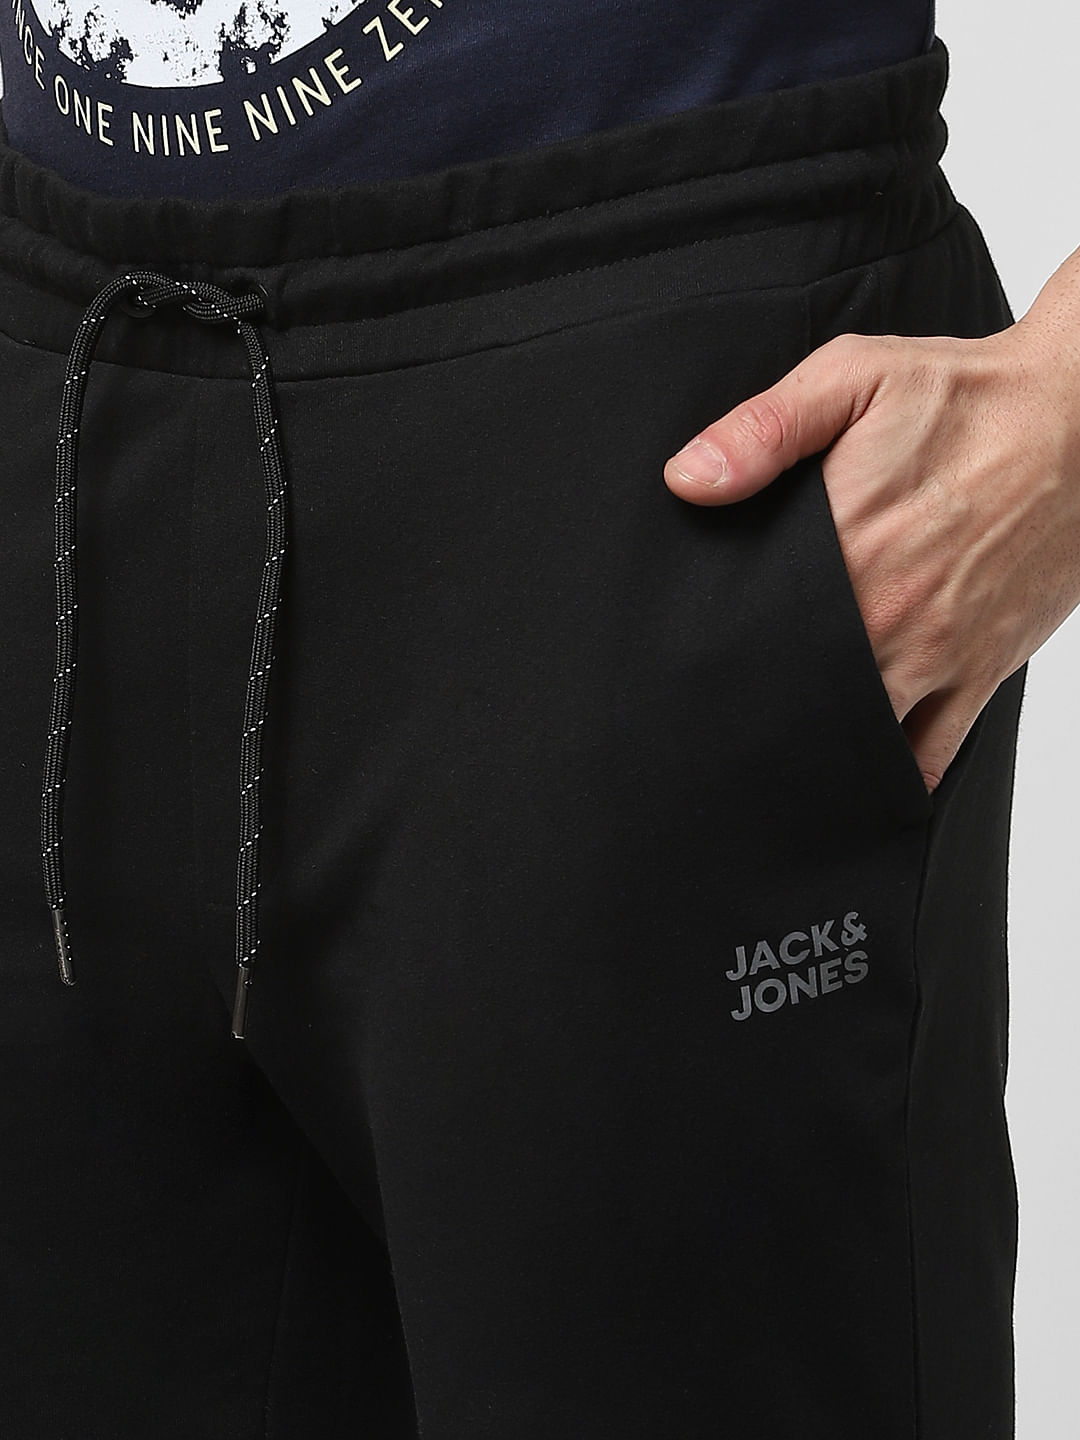 Jack & Jones intelligence cargo sweatpants in slim fit black | ASOS